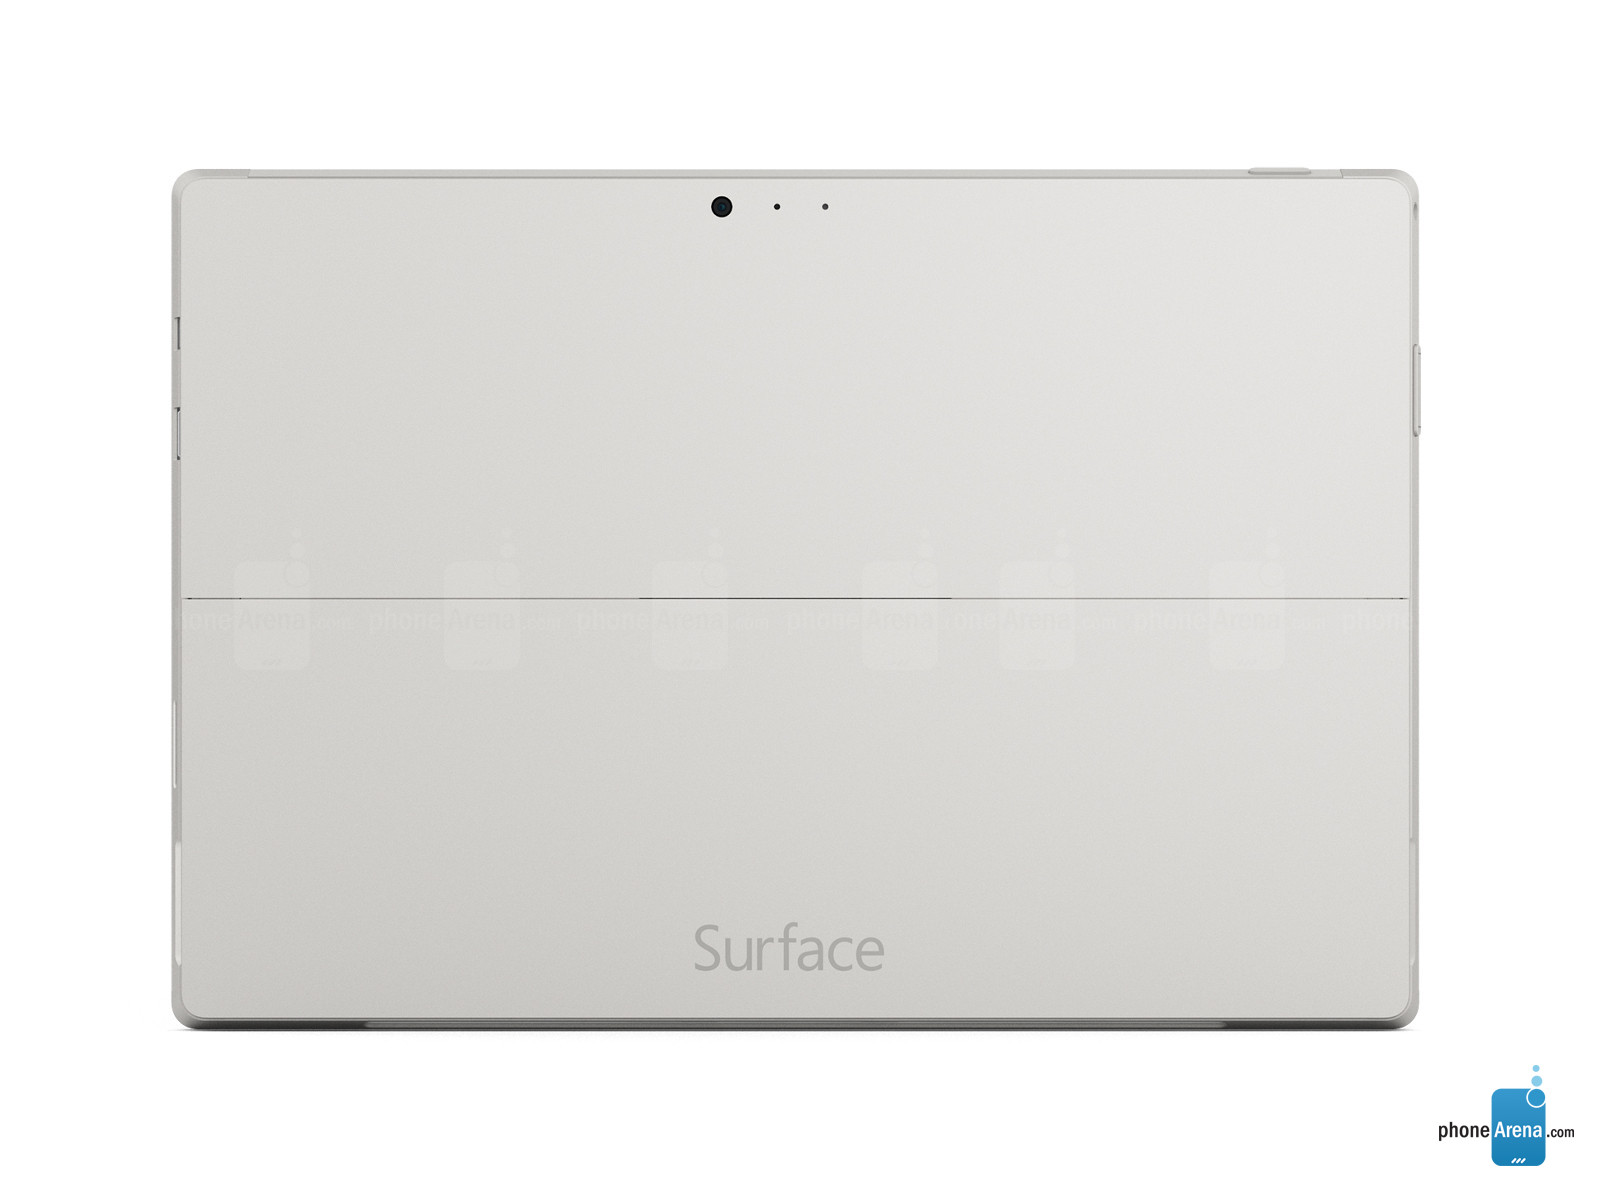 Microsoft Surface Pro Specs